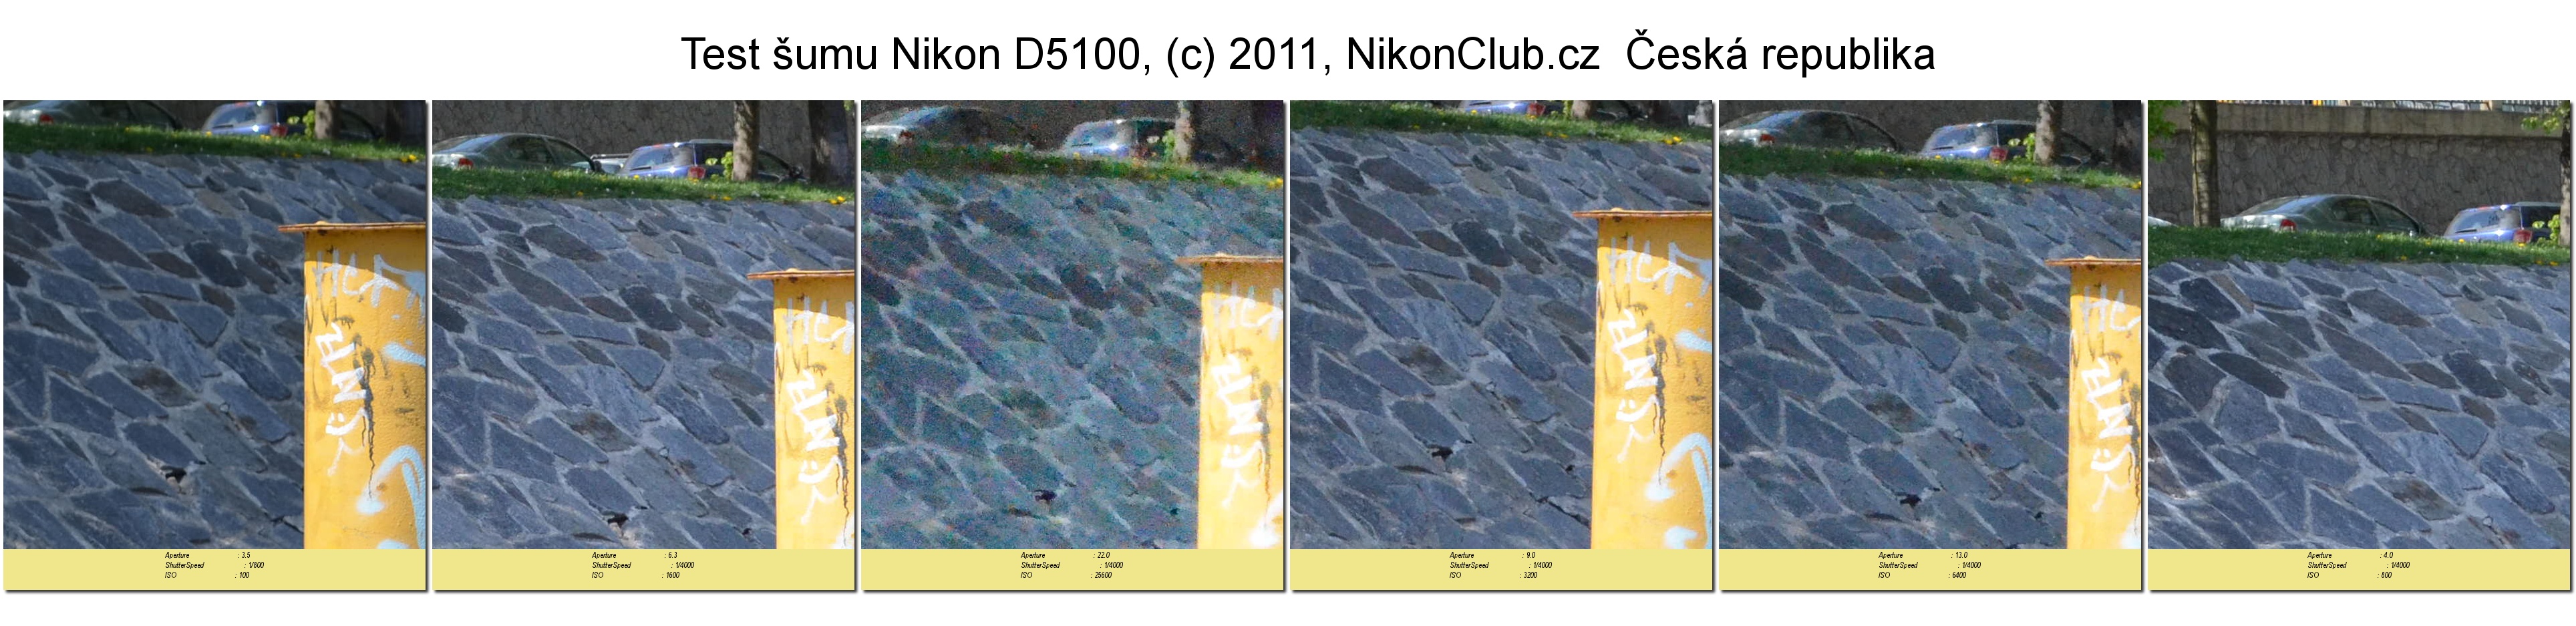 Test citlivosti Nikon D5100, (c) NikonClub Česká republika